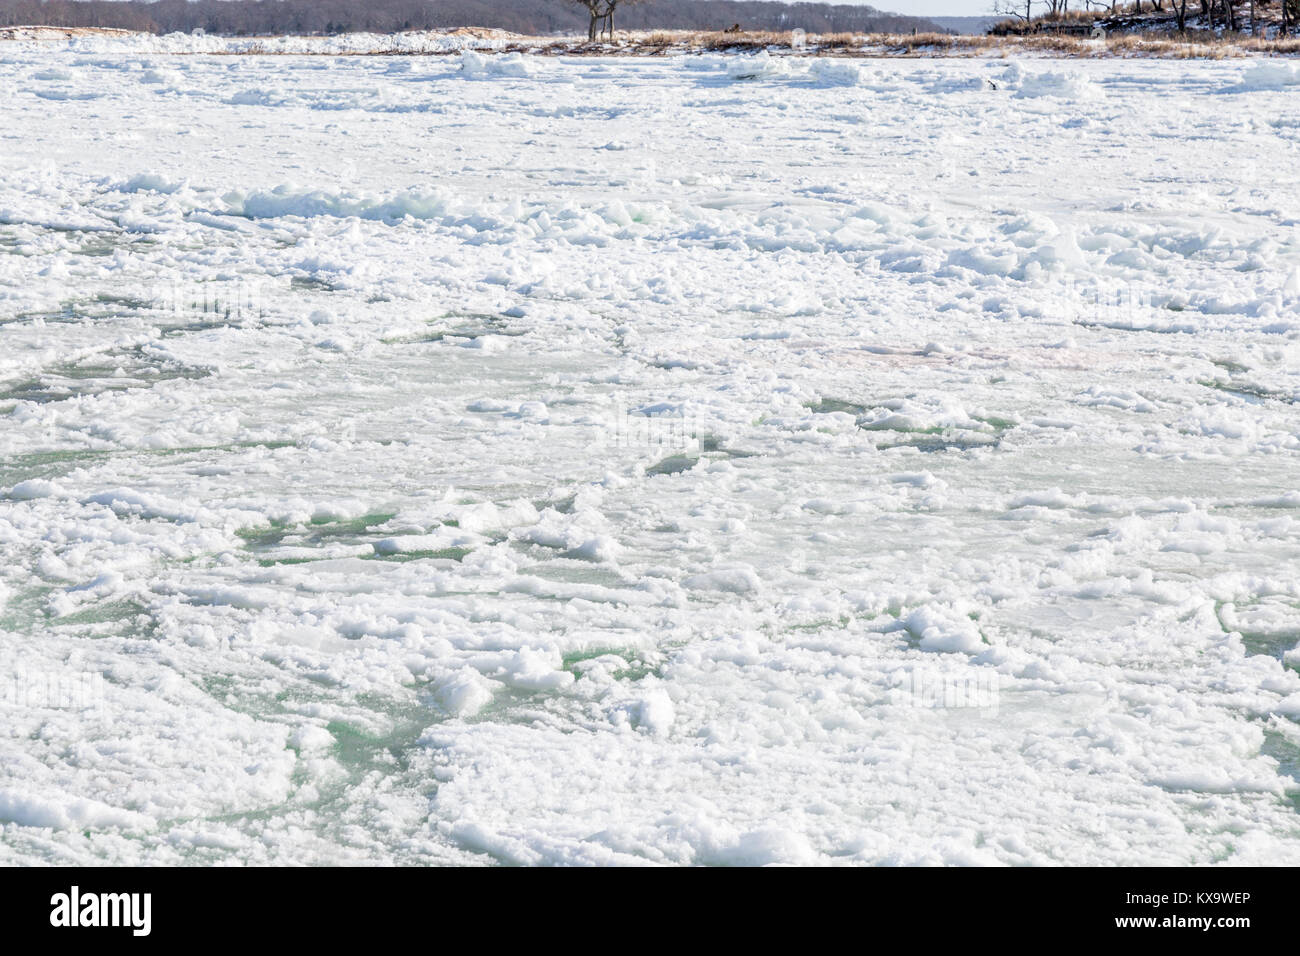 frozen salt water on shelter island ferry crossing Stock Photo